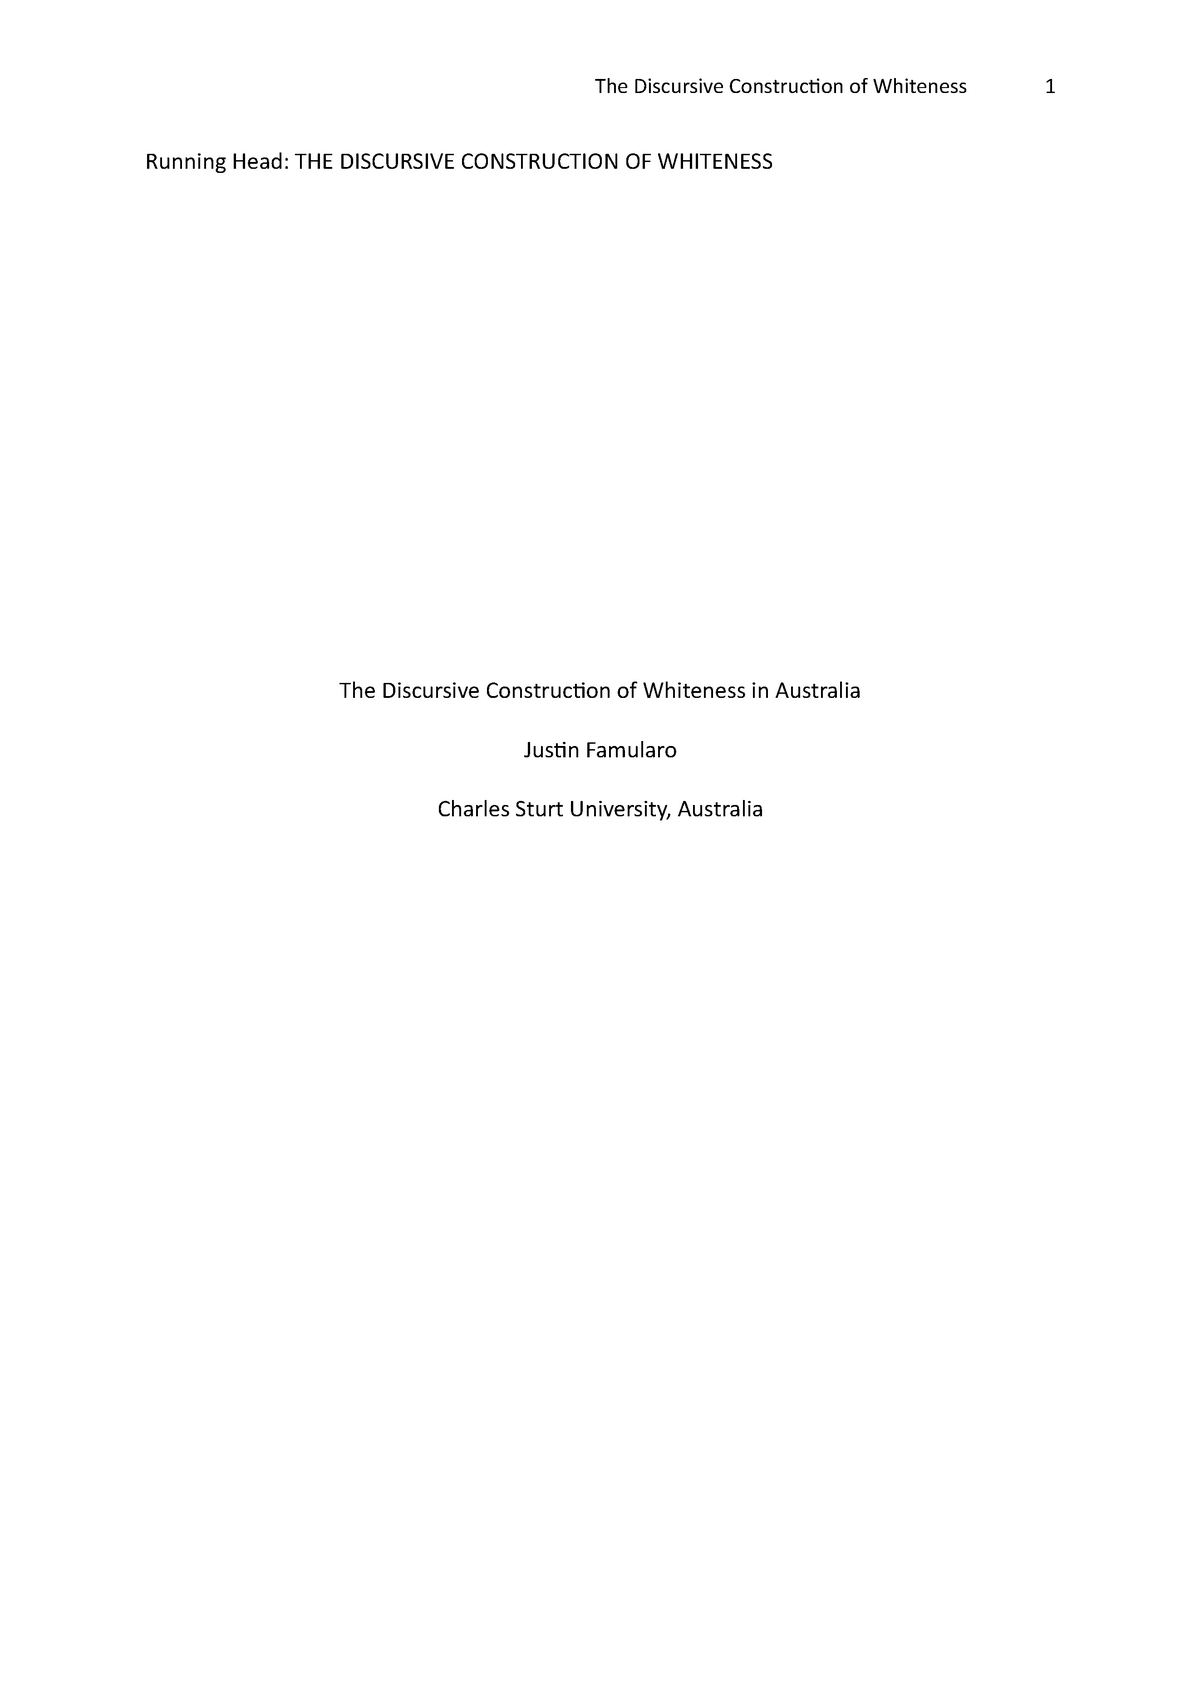 three minute thesis australia about 'whiteness'